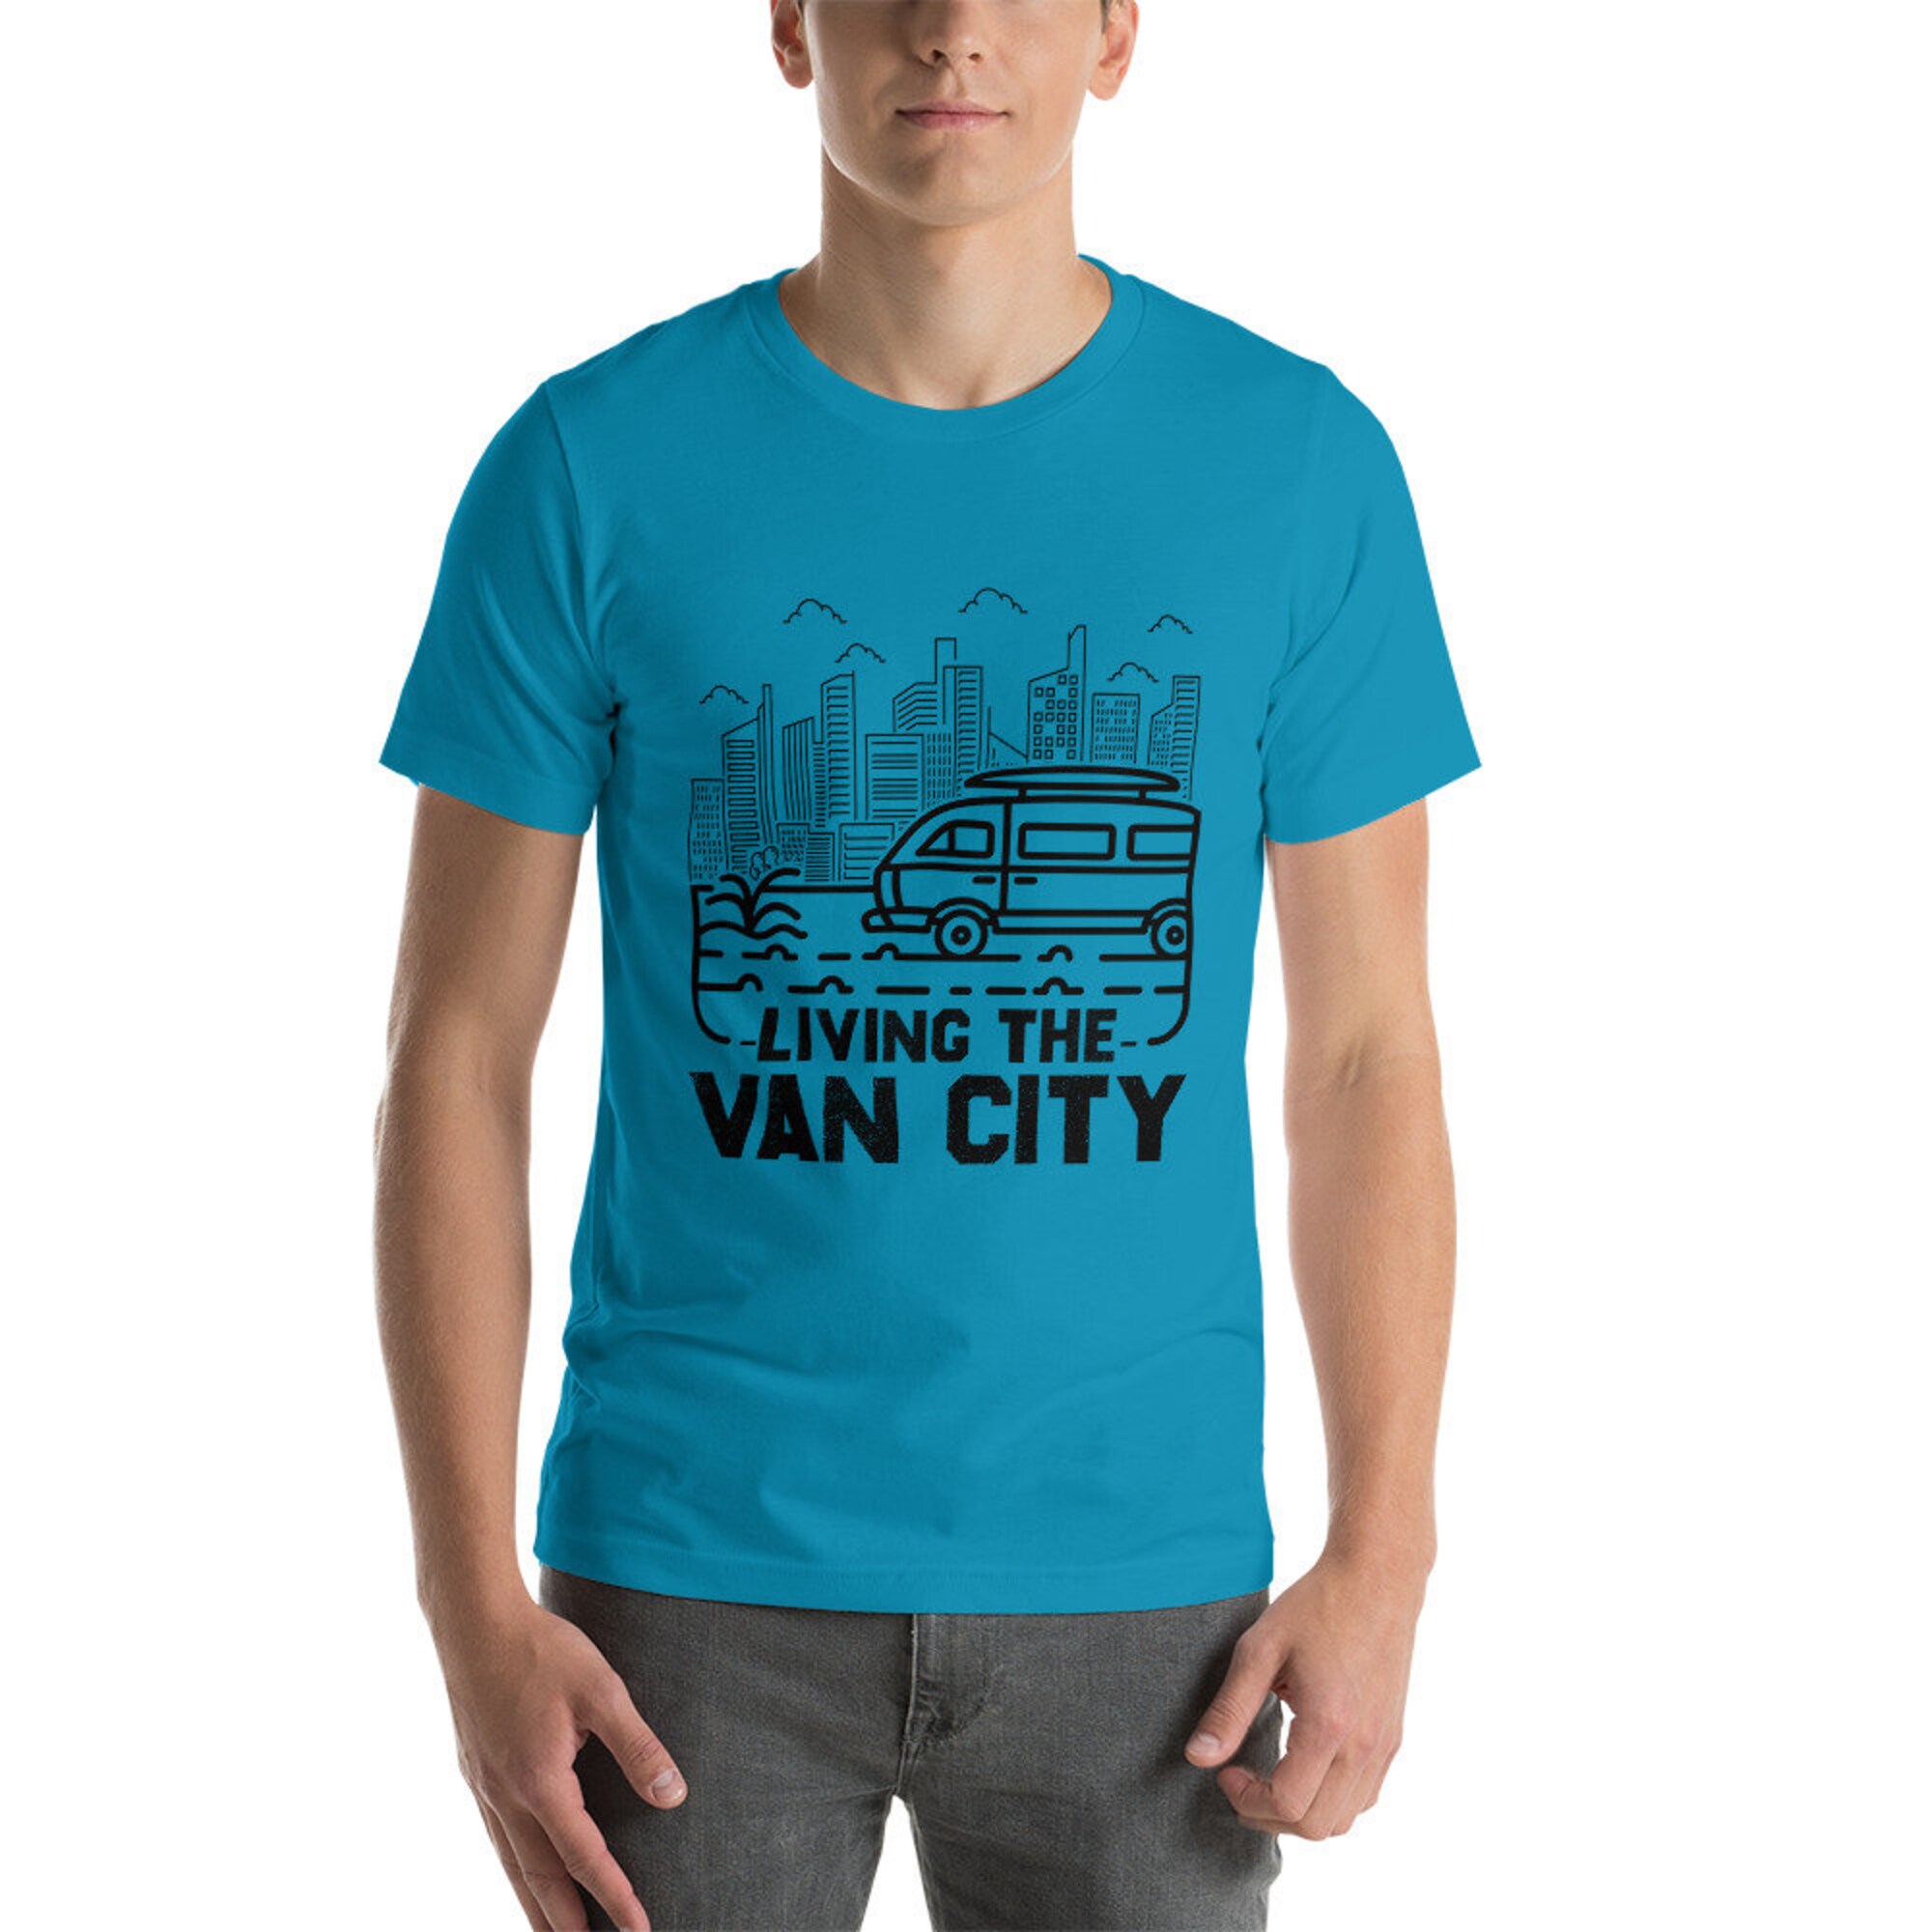 Discover Living The Van City T-Shirt, Van Life Shirt, Living Van Life Shirt, RV Shirt, Campervan Shirt, Road Trip Shirt, Traveler Shirt, Outdoor Gift